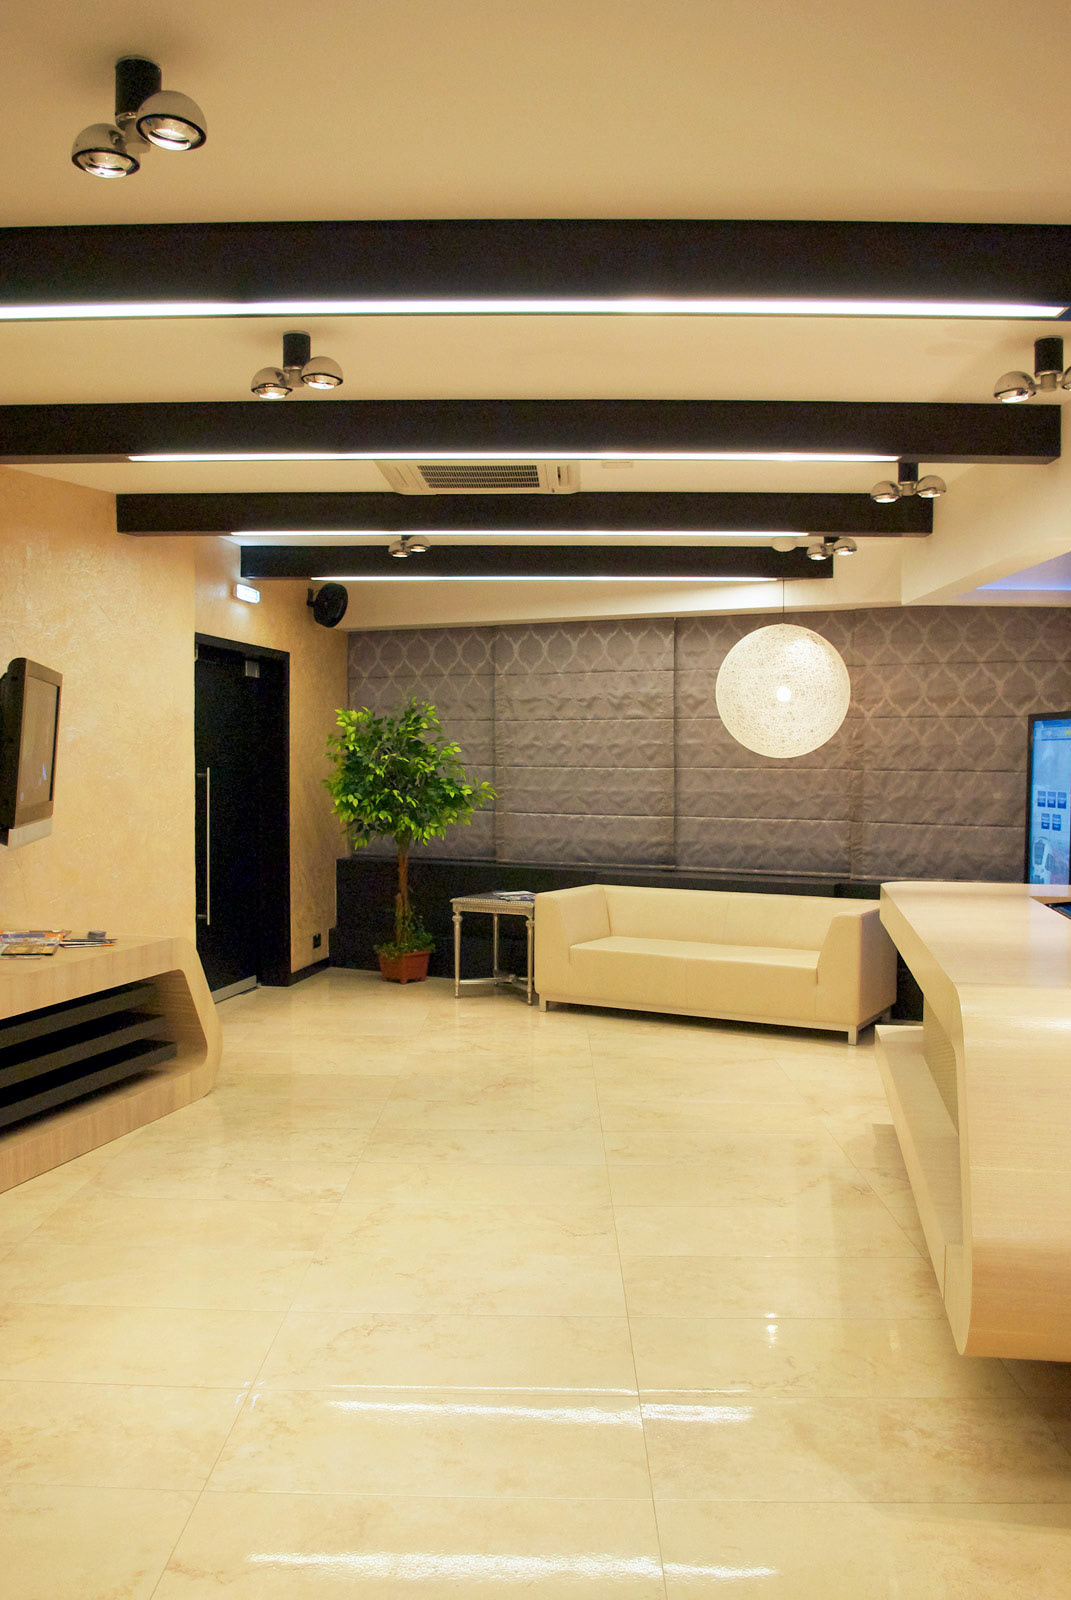 VIP-lounge  transportation  waiting-area  luxury  bar  service  Bio-fireplace glass-panel waterfall Custom furniture